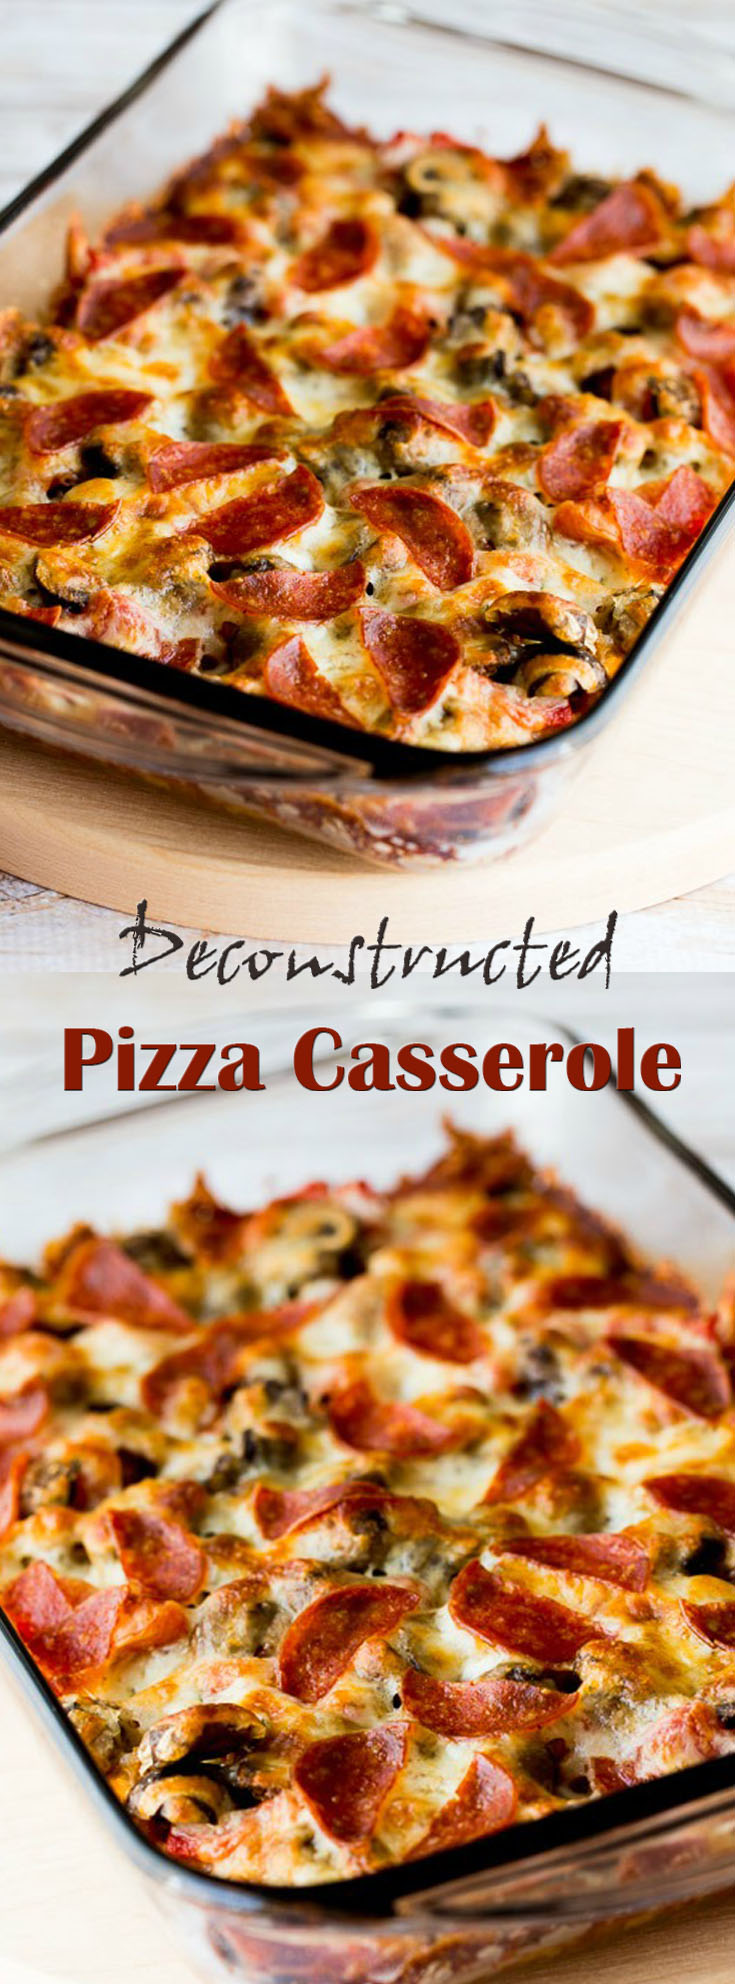 Deconstructed Pizza Casserole